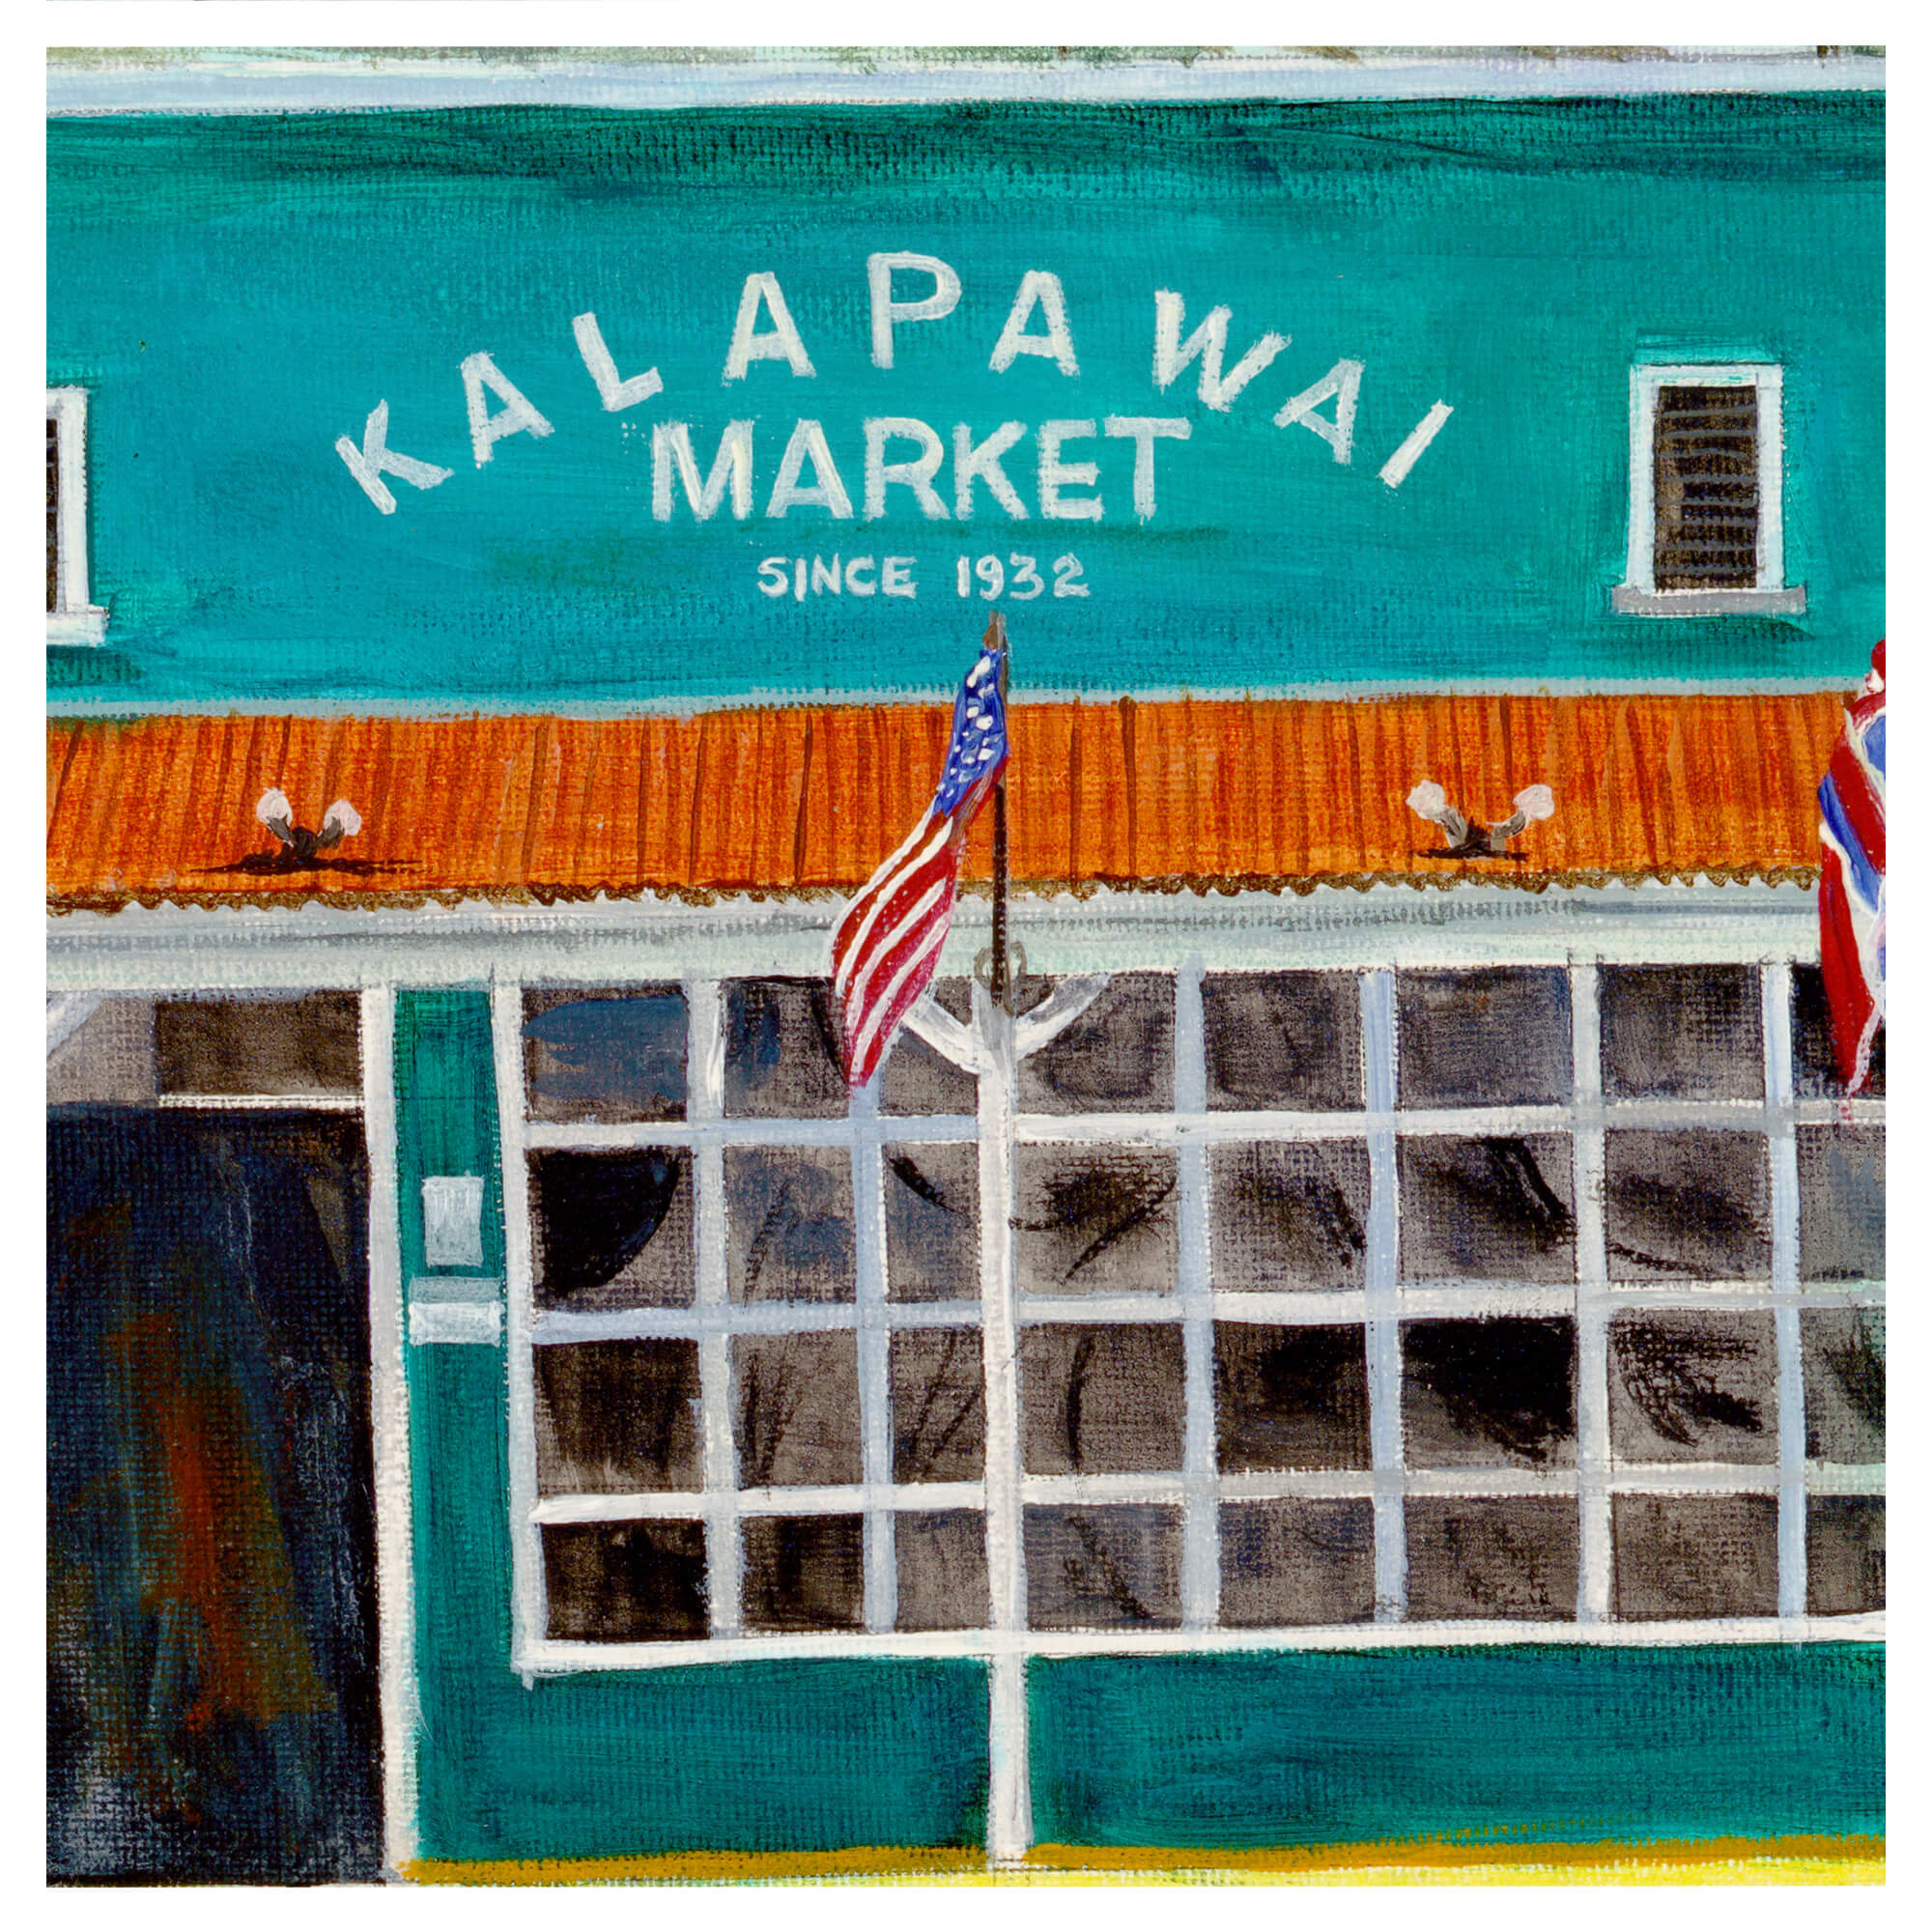 An illustration showcasing a market by hawaii artist EsperanceRakotonirina